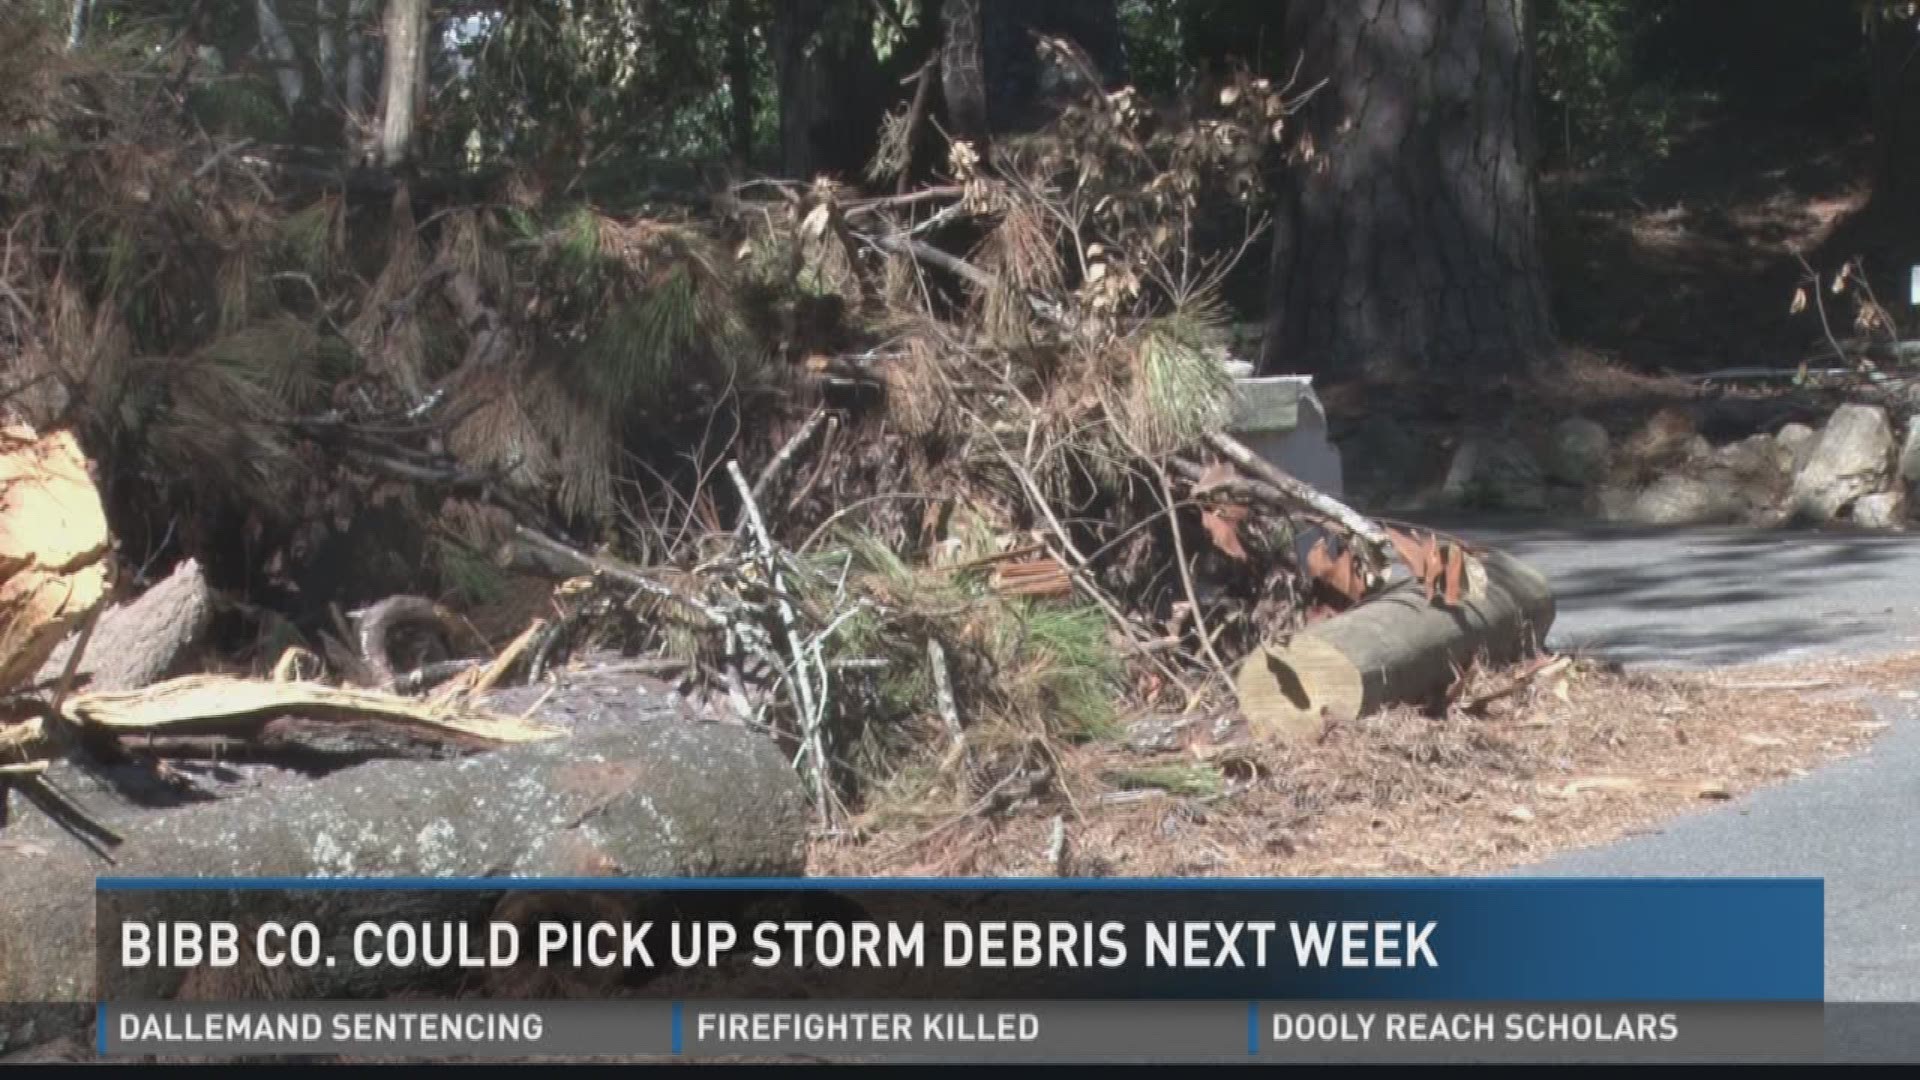 Bibb could pick up storm debris next week